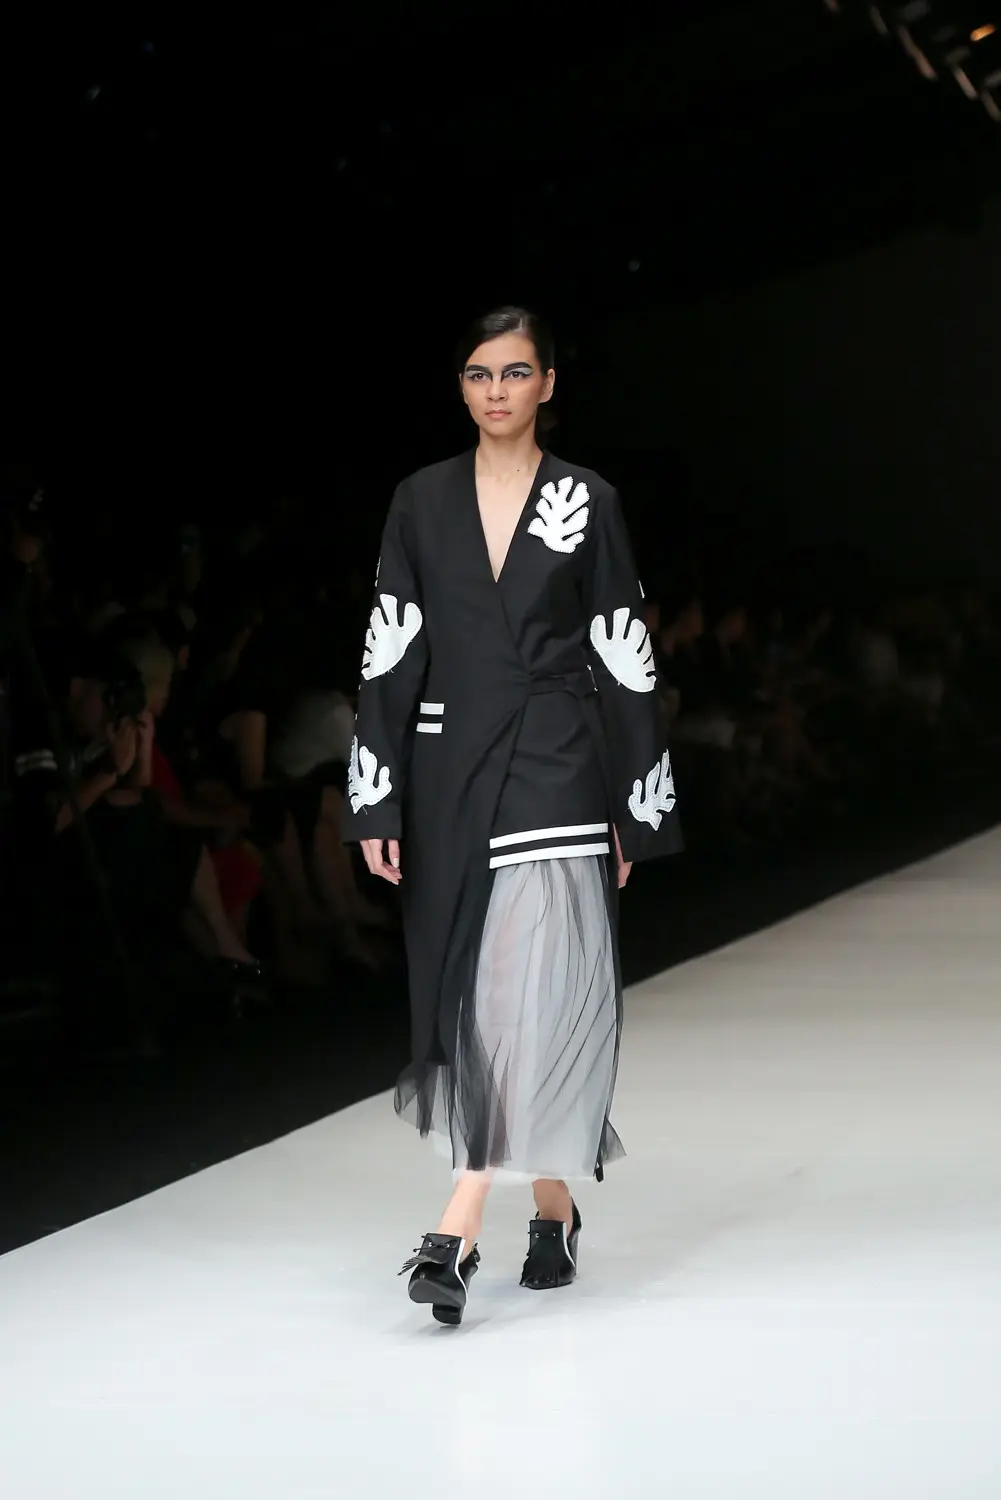 Dewi Fashion Knights bertemakan modernisasi. (Daniel Kampua/Bintang.com)